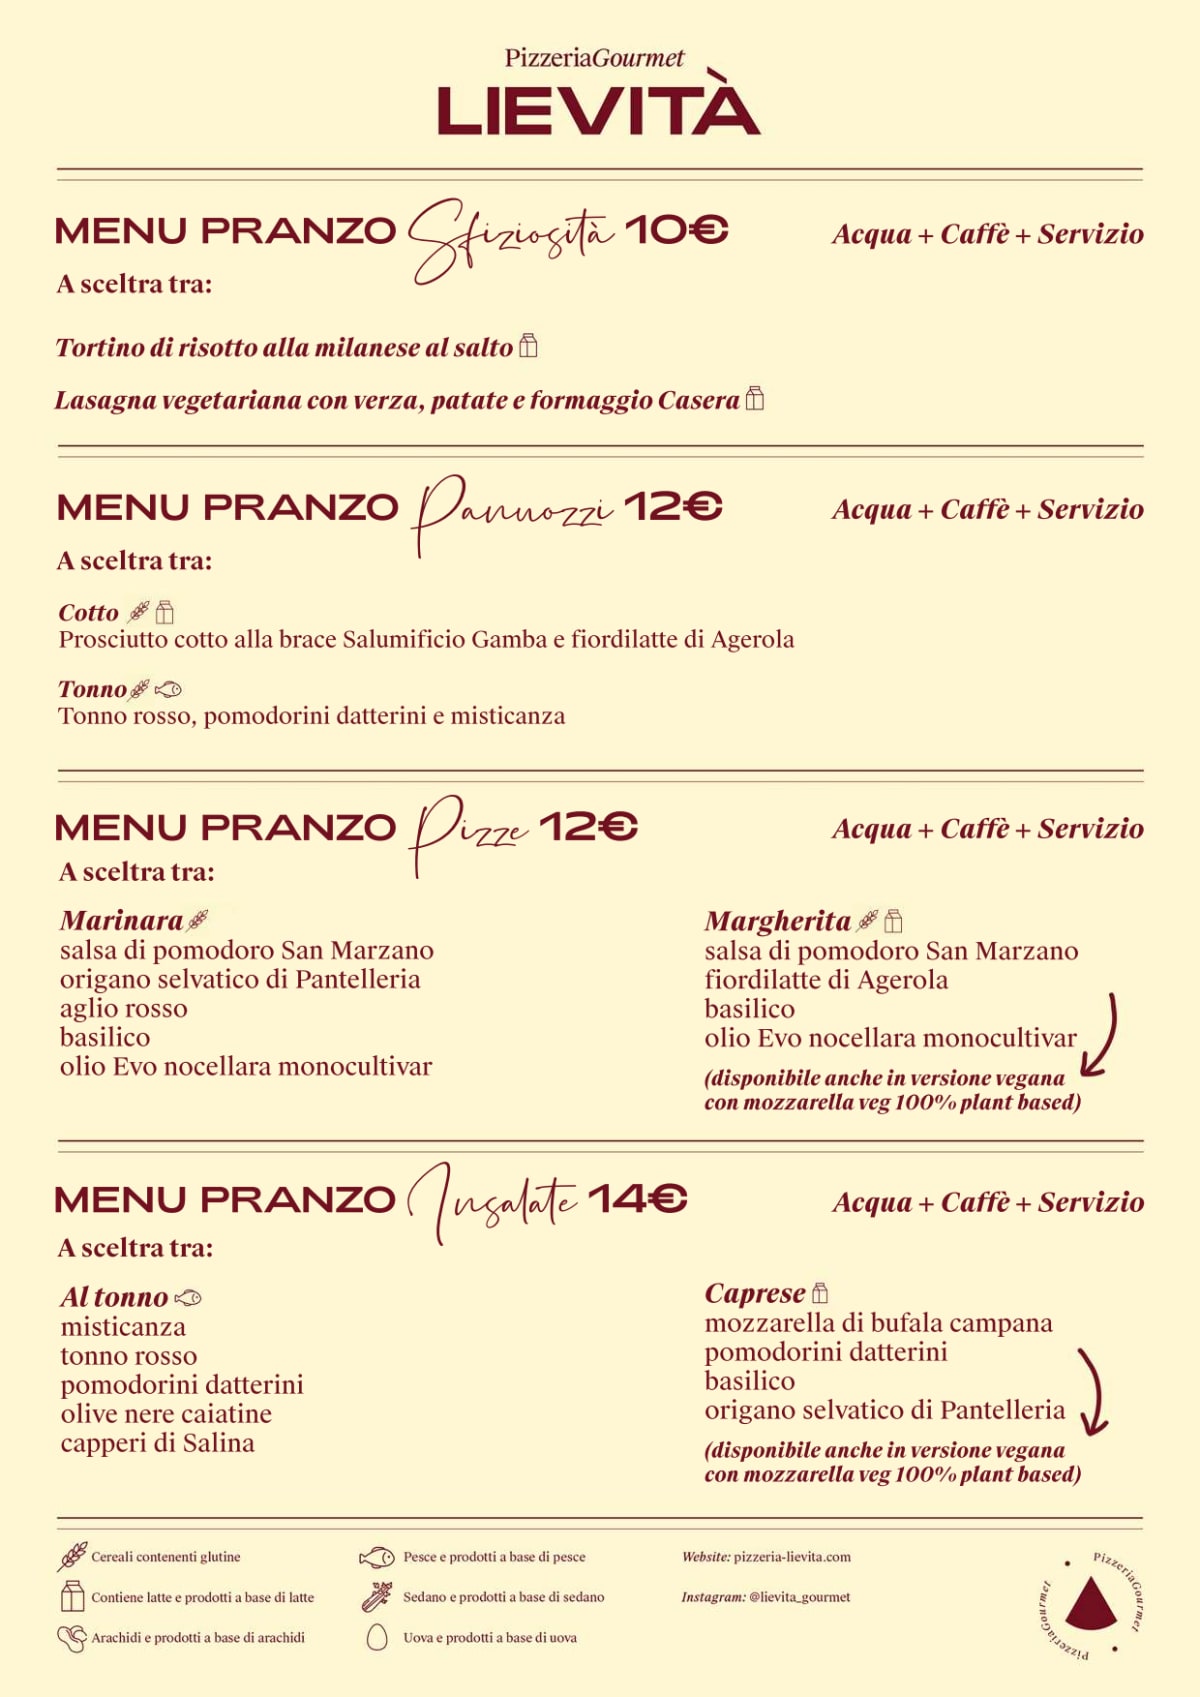 Lievità Sottocorno - Pizzeria Gourmet menu